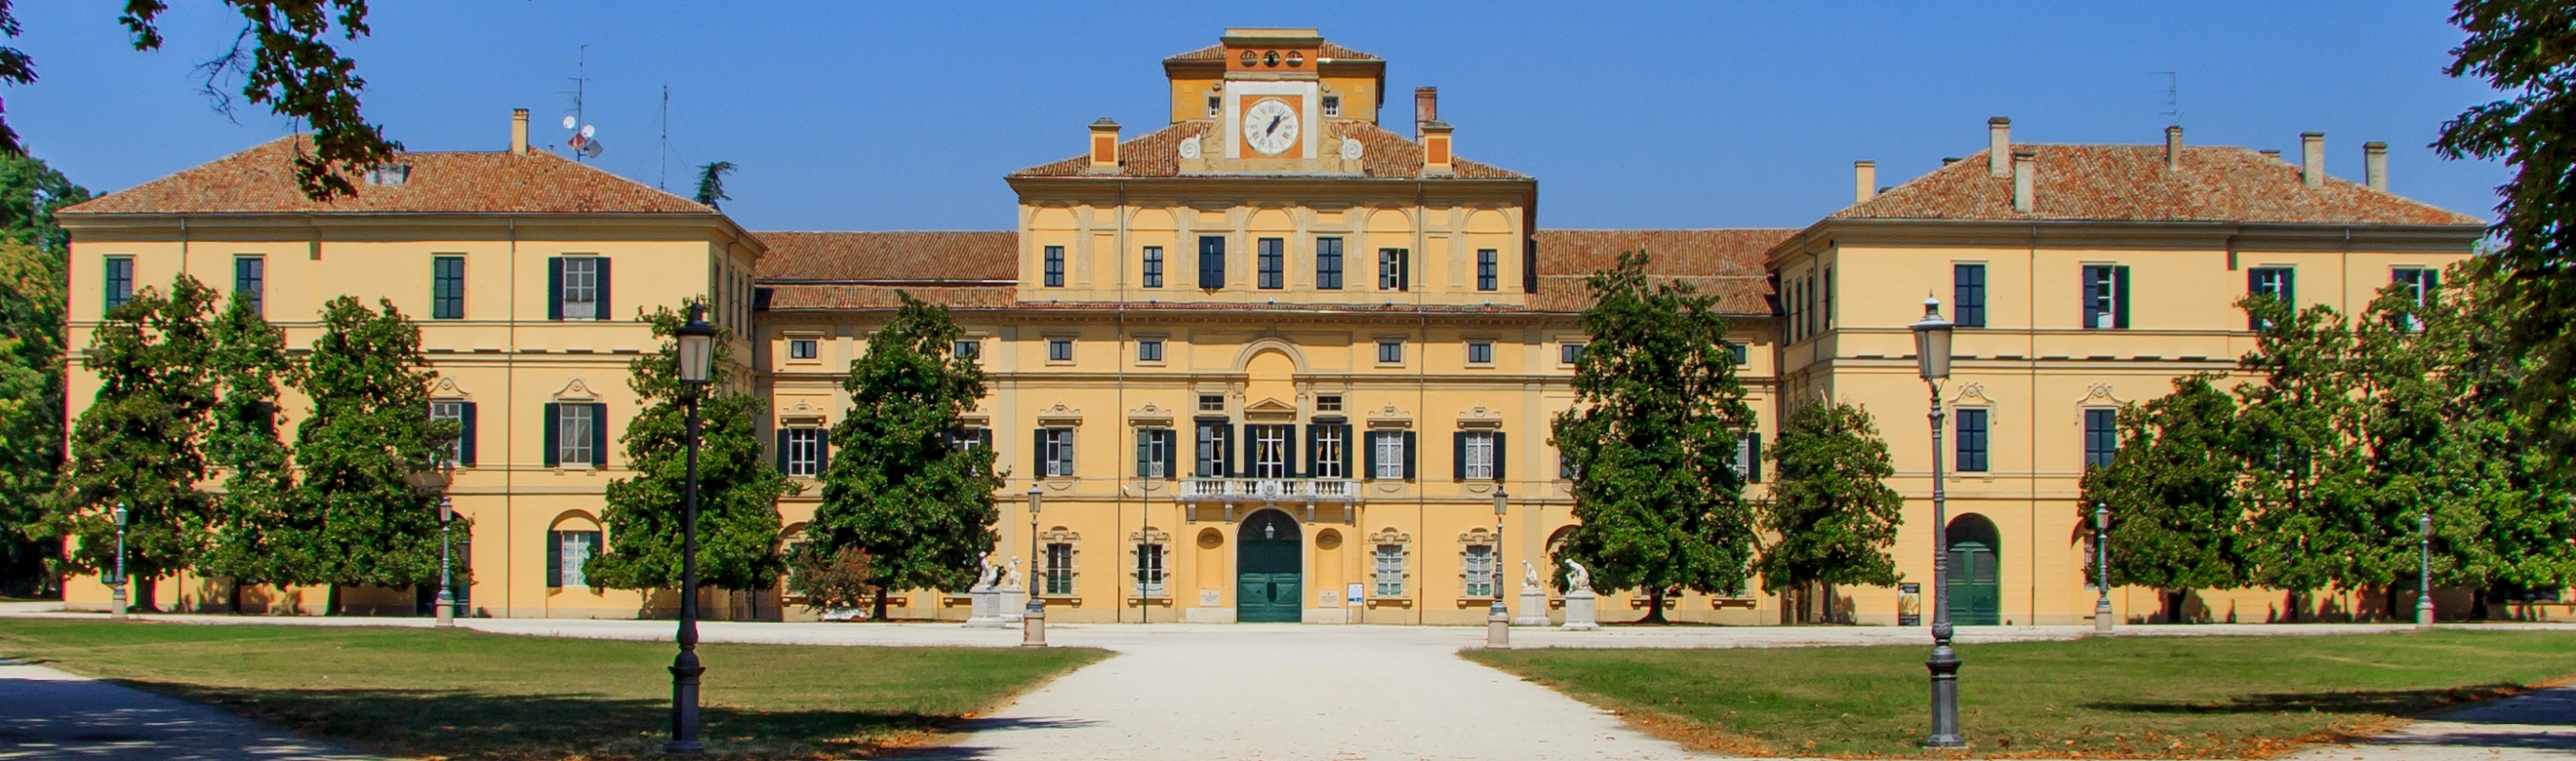 Palazzo Ducale PARMA - Adriana verolla